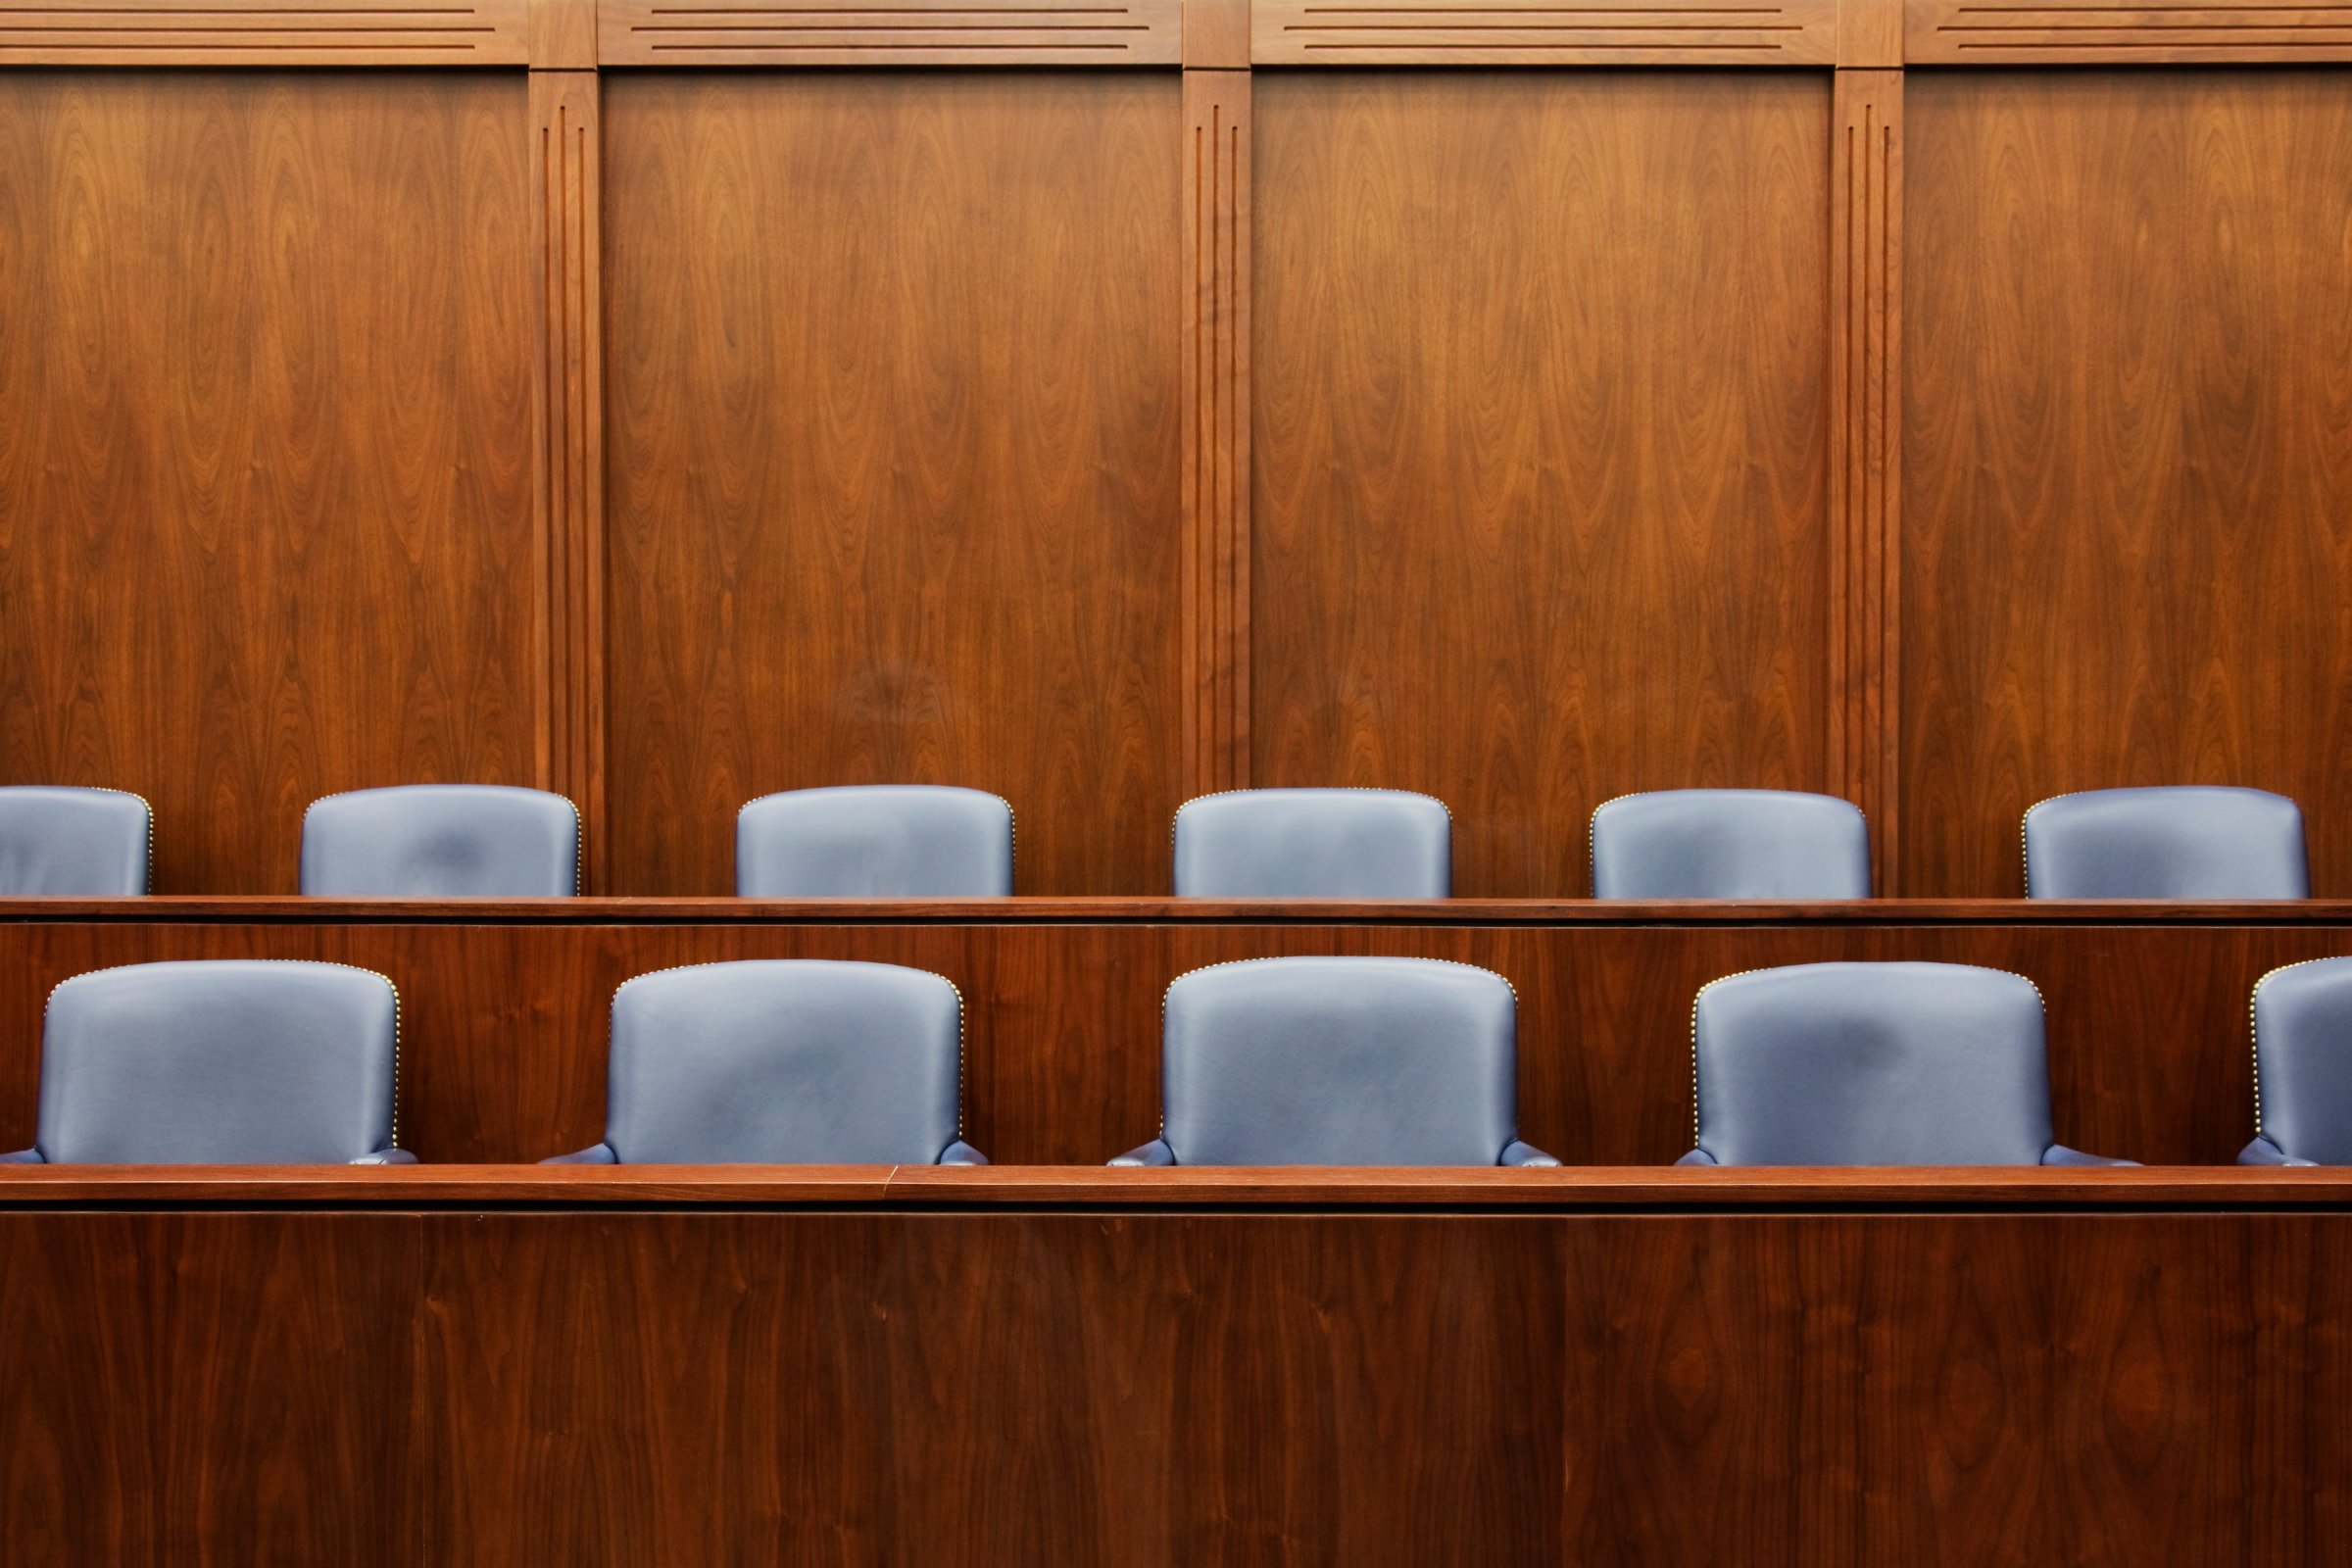 Empty chairs in jury box